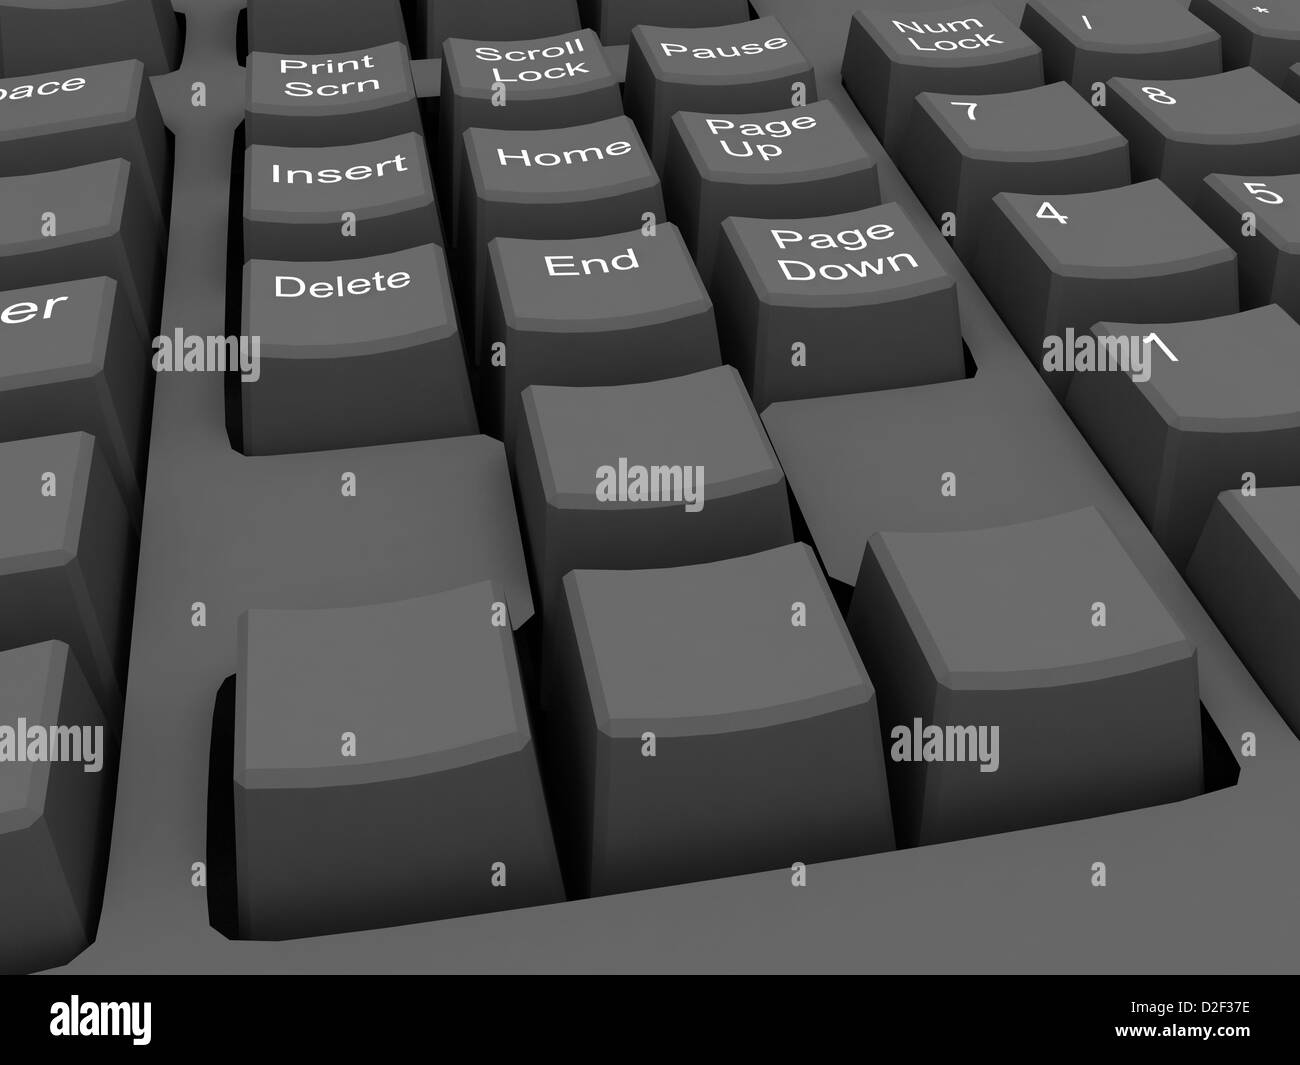 blank button in keyboard Stock Photo